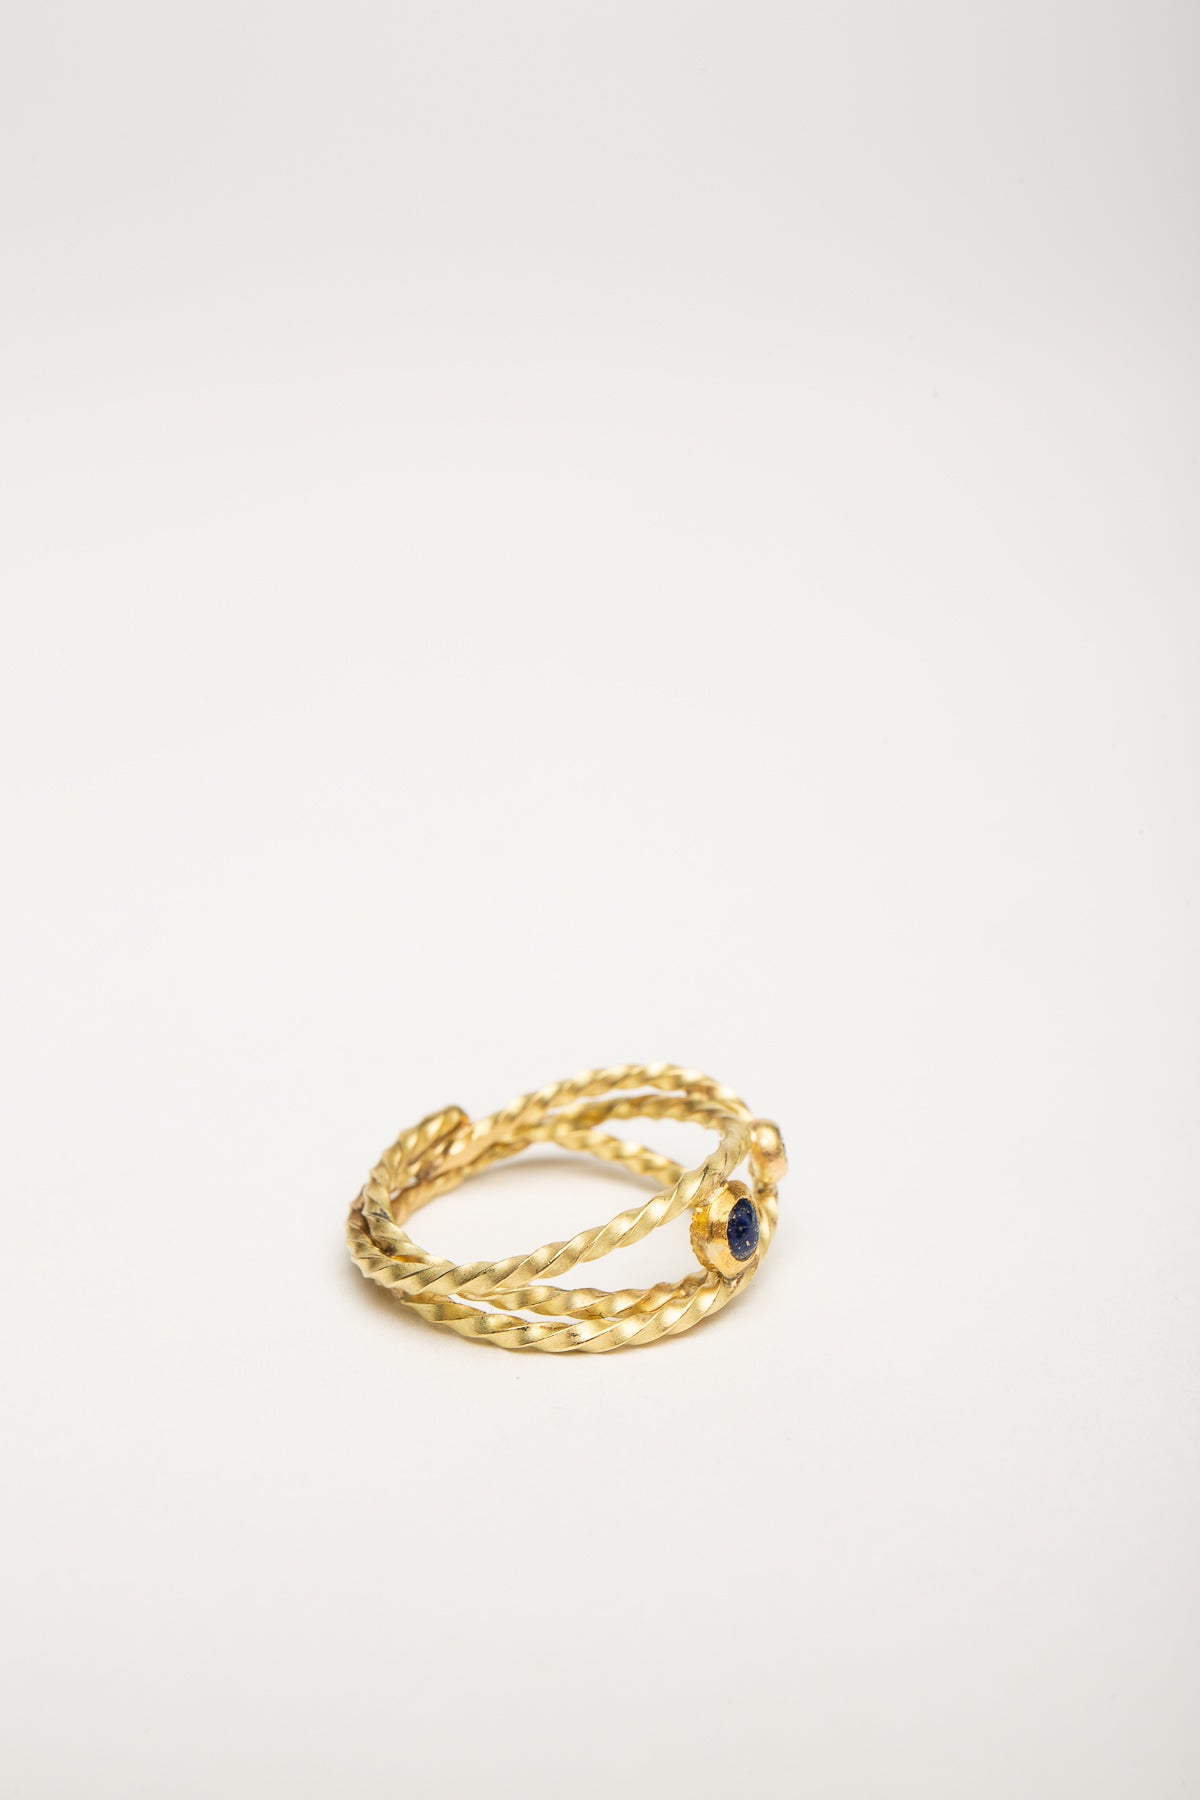 BOAZ KASHI | 18K GOLD ROPE DIAMOND RING